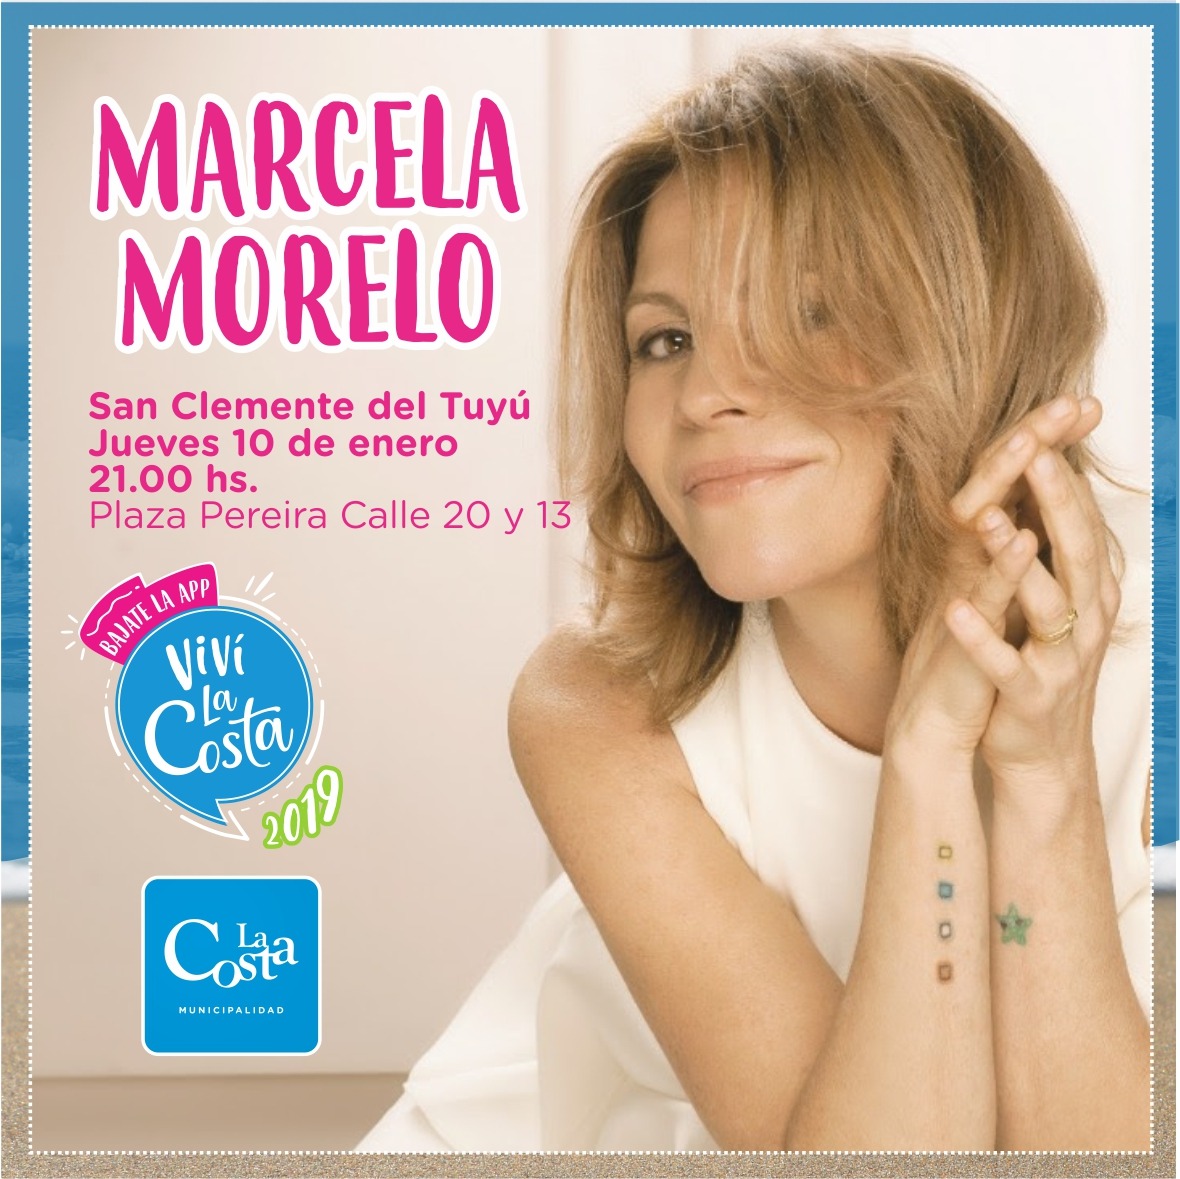  Marcela Morelo se presentará esta noche en San Clemente